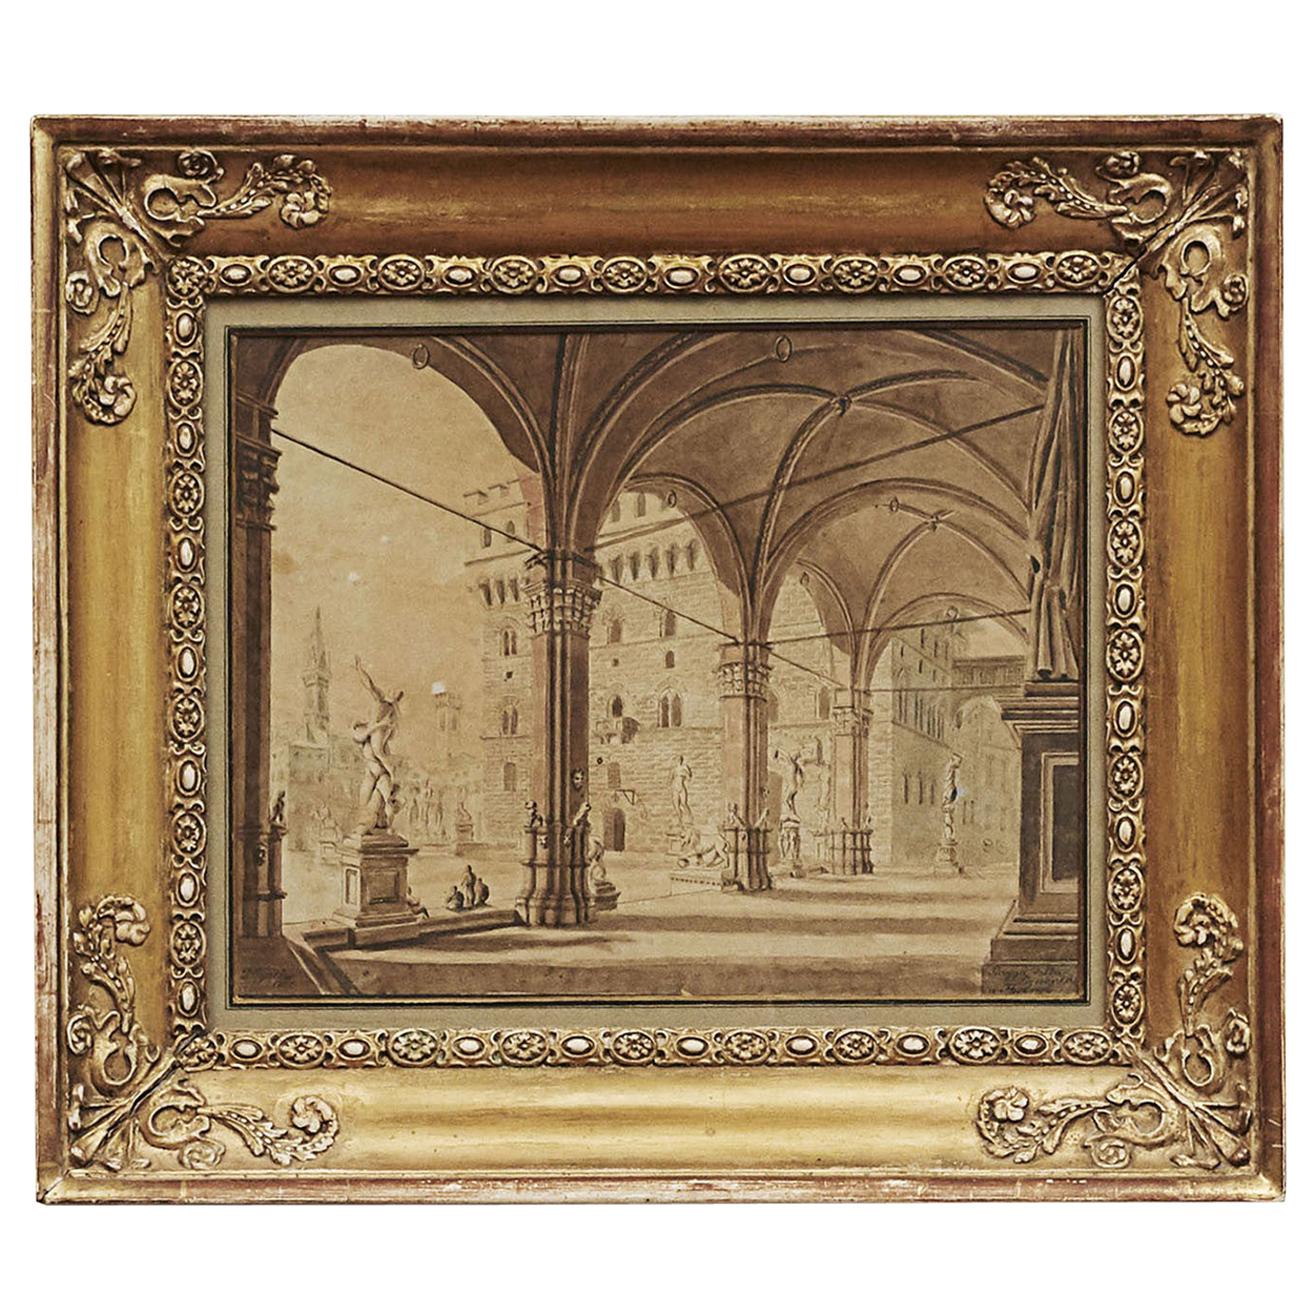 "Palazzo della Signoria", Florence. Signed P. Gynther, 1822